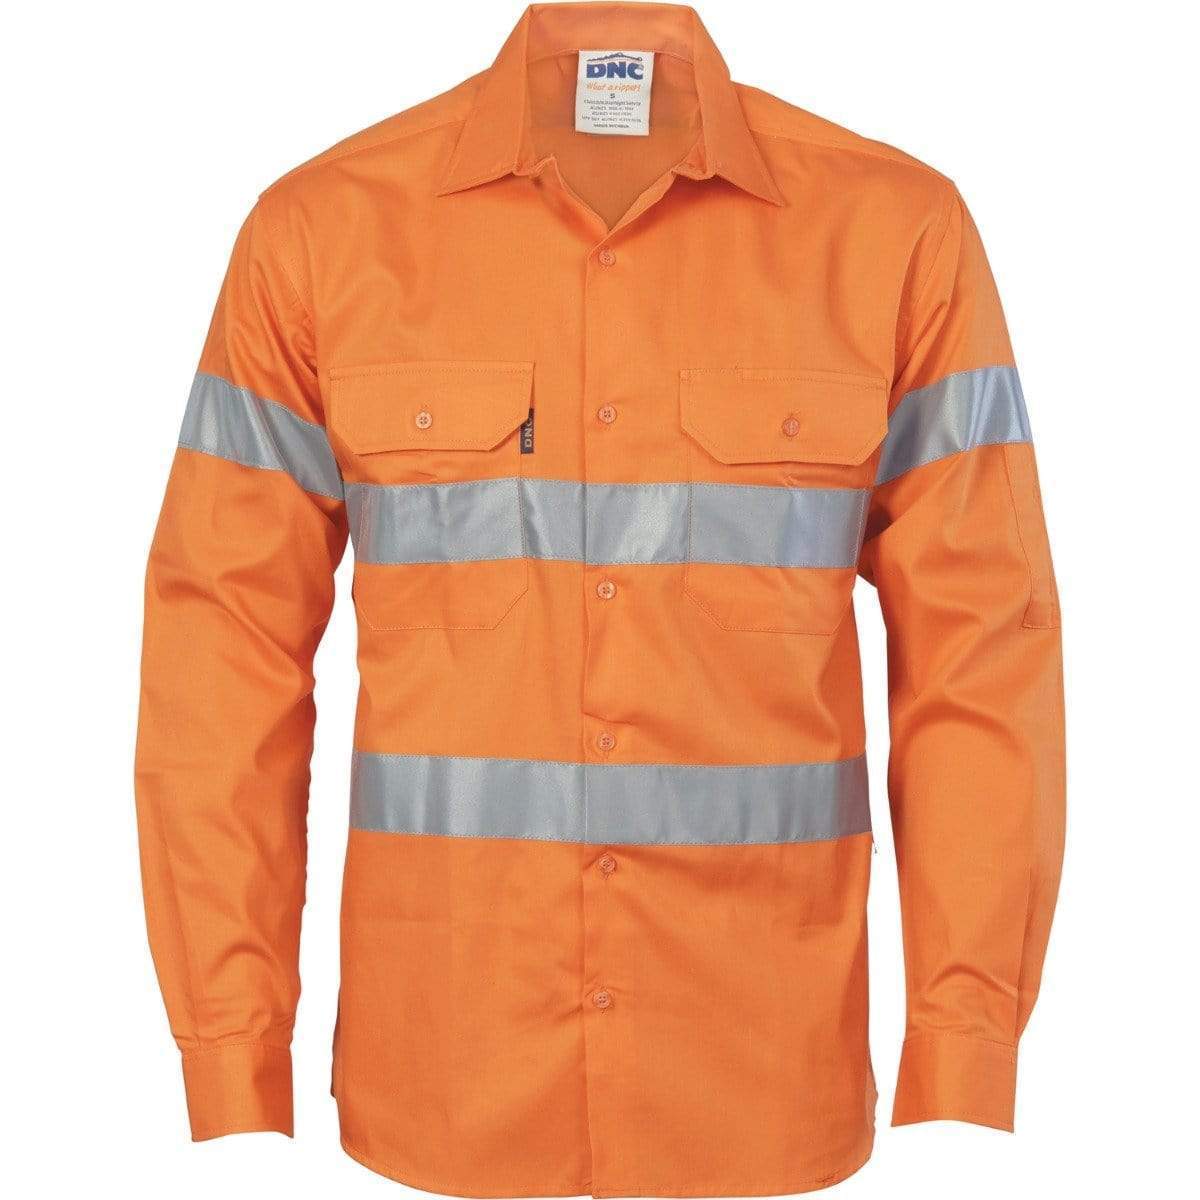 Dnc Workwear Hi-vis Cool-breeze Long Sleeve Cotton Shirt With Generic Reflective Tape - 3967 Work Wear DNC Workwear Orange XS 